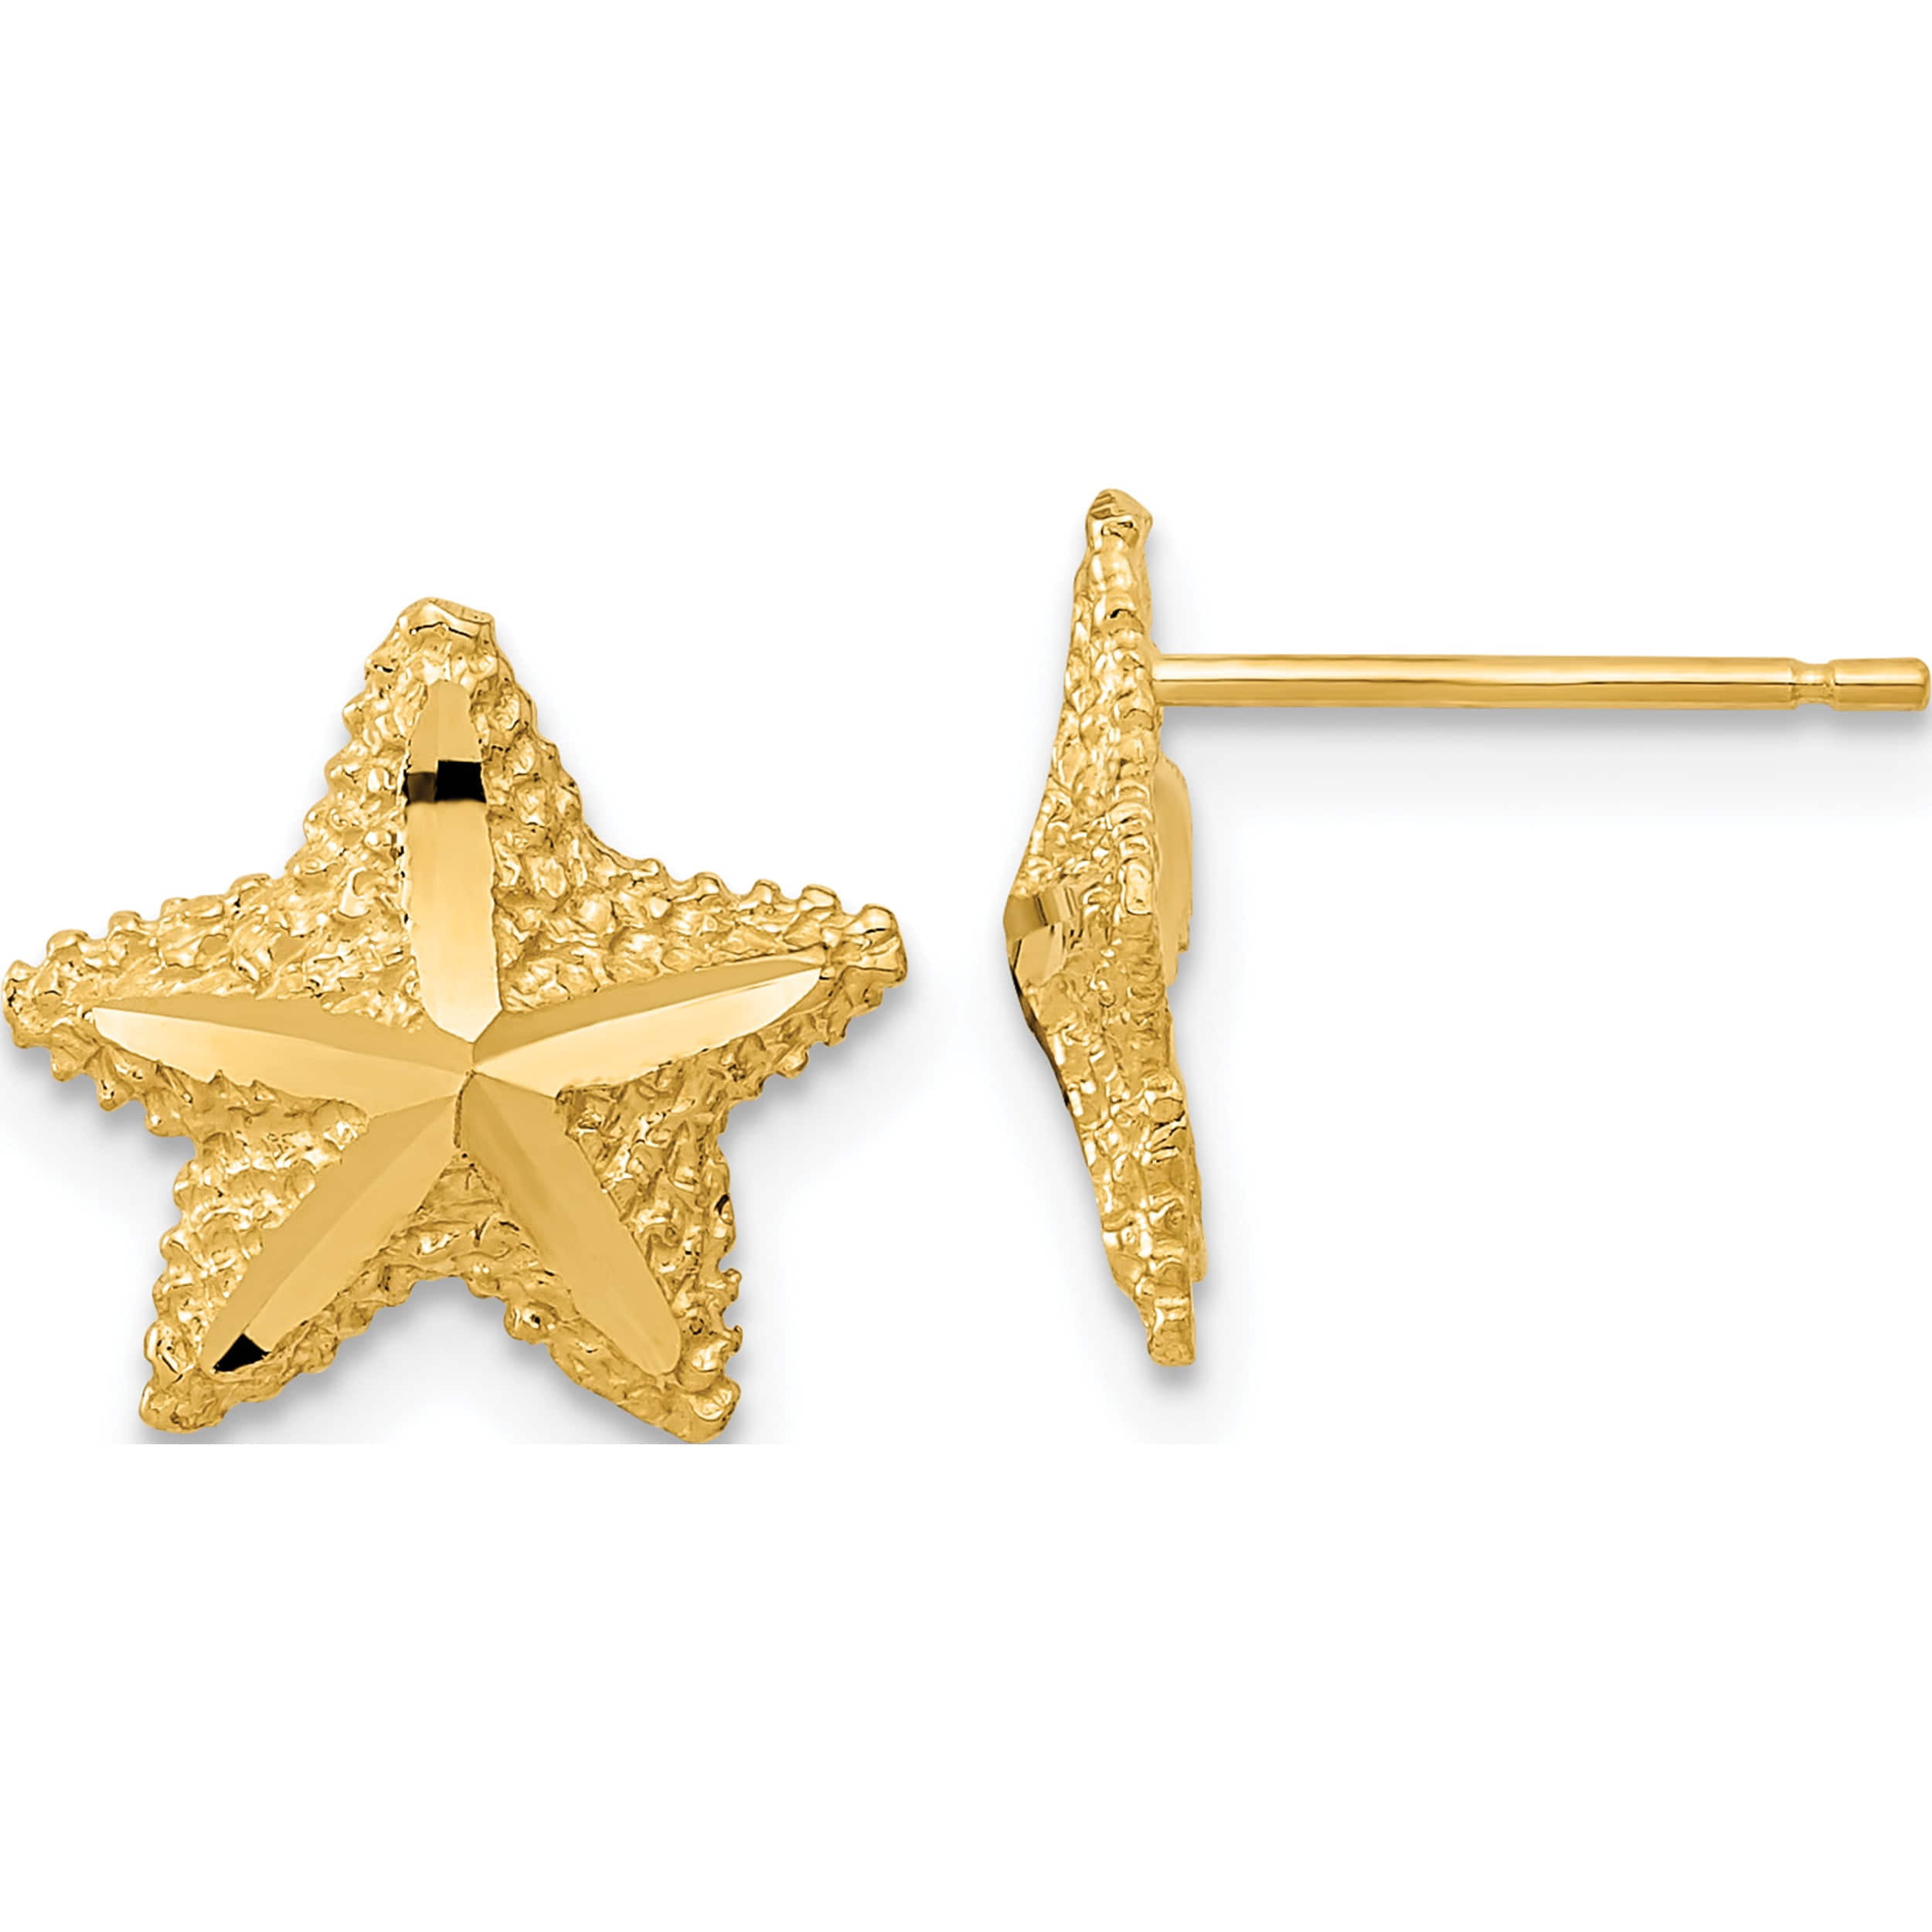 14K Real Yellow Gold Star Fish Post Stud Earrings 